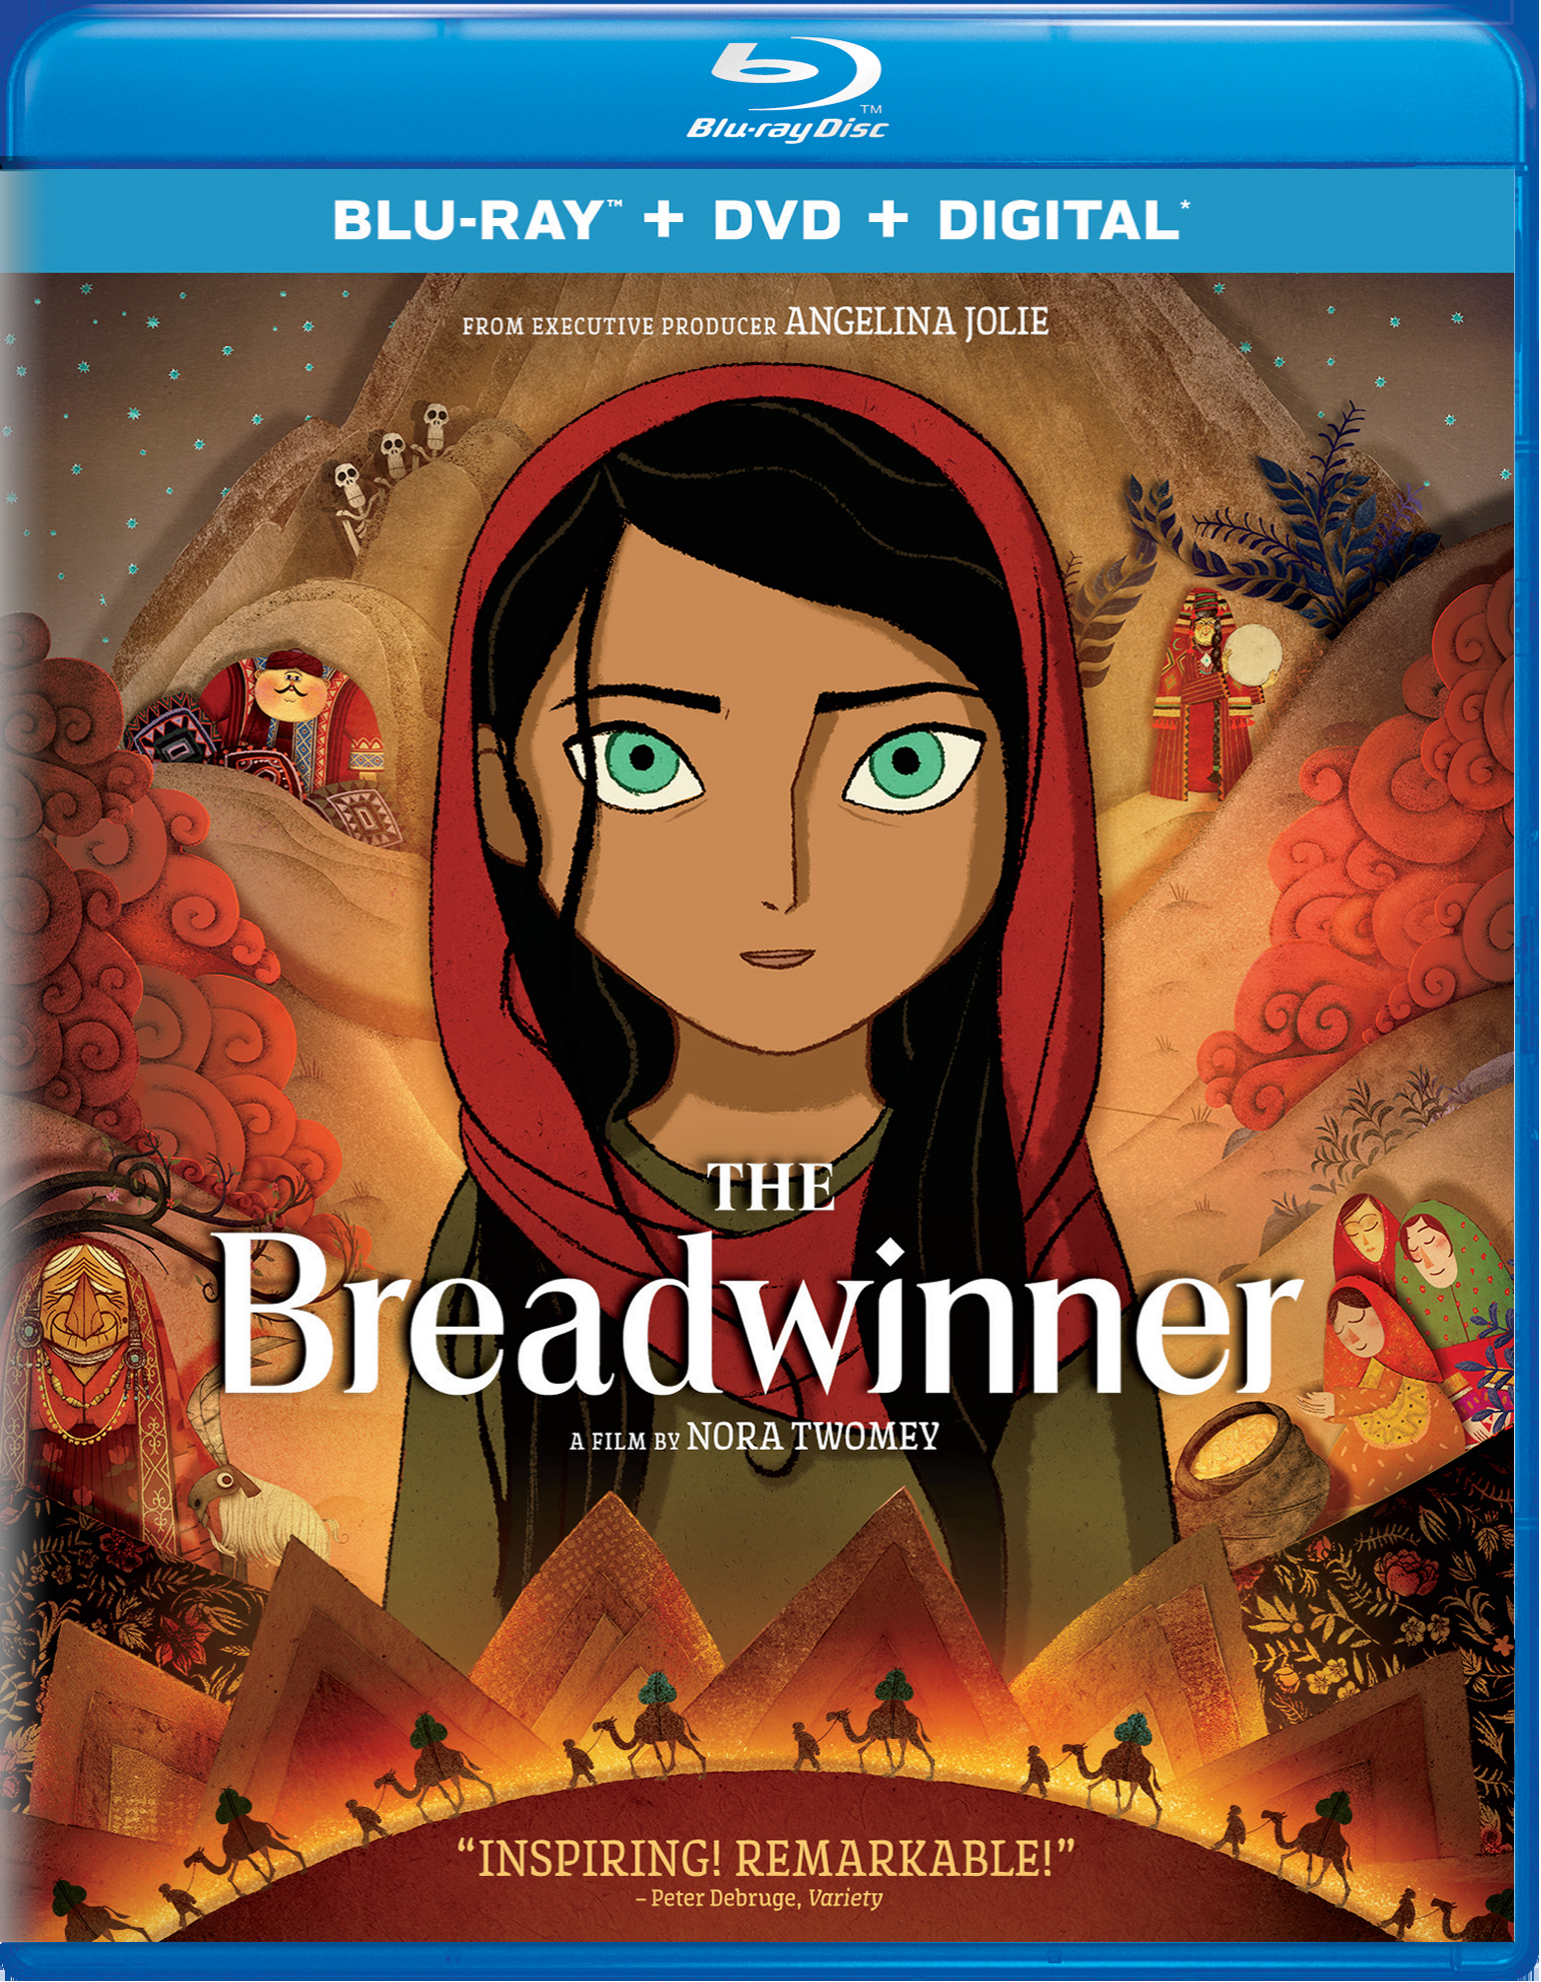 The Breadwinner (DVD + Digital) - Blu-ray [ 2017 ]  - Animation Movies On Blu-ray - Movies On GRUV